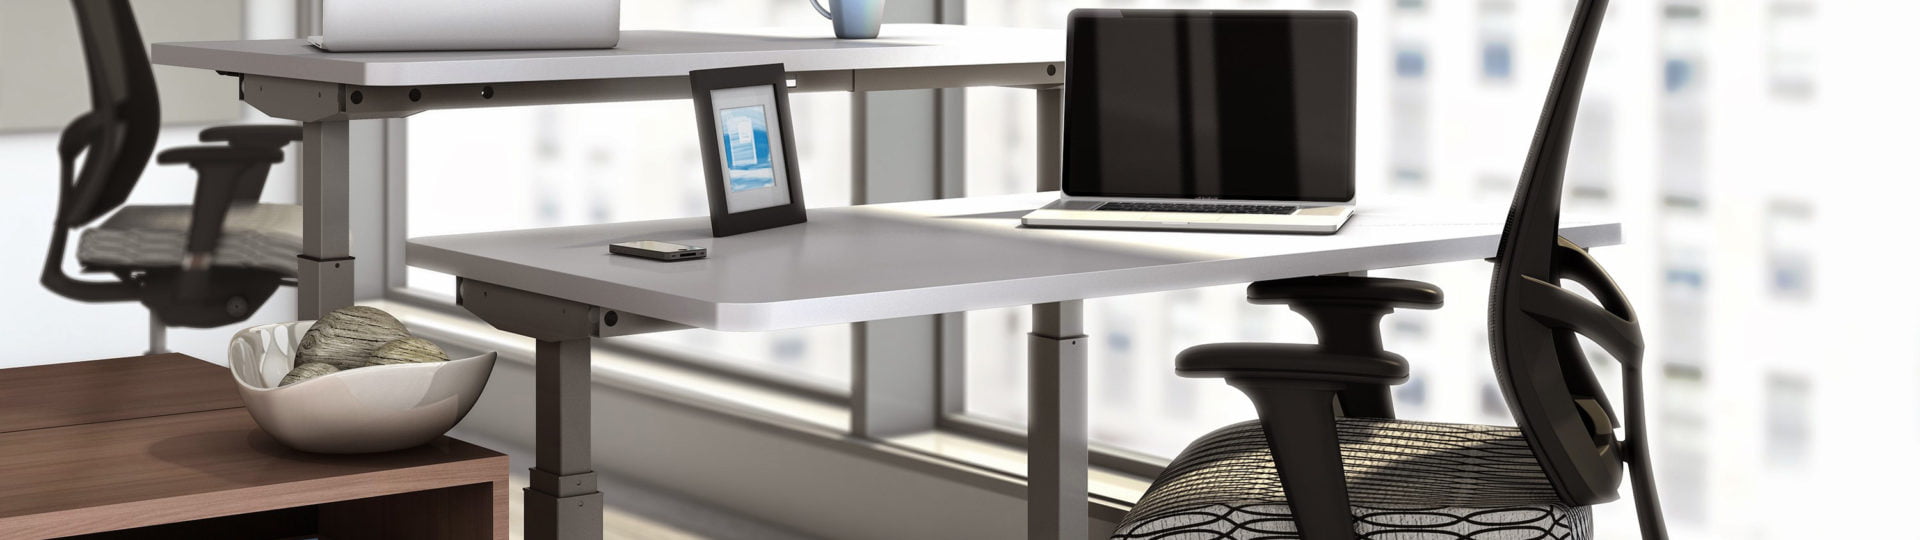 sit-stand height adjustable ergonomic desks by Mayline